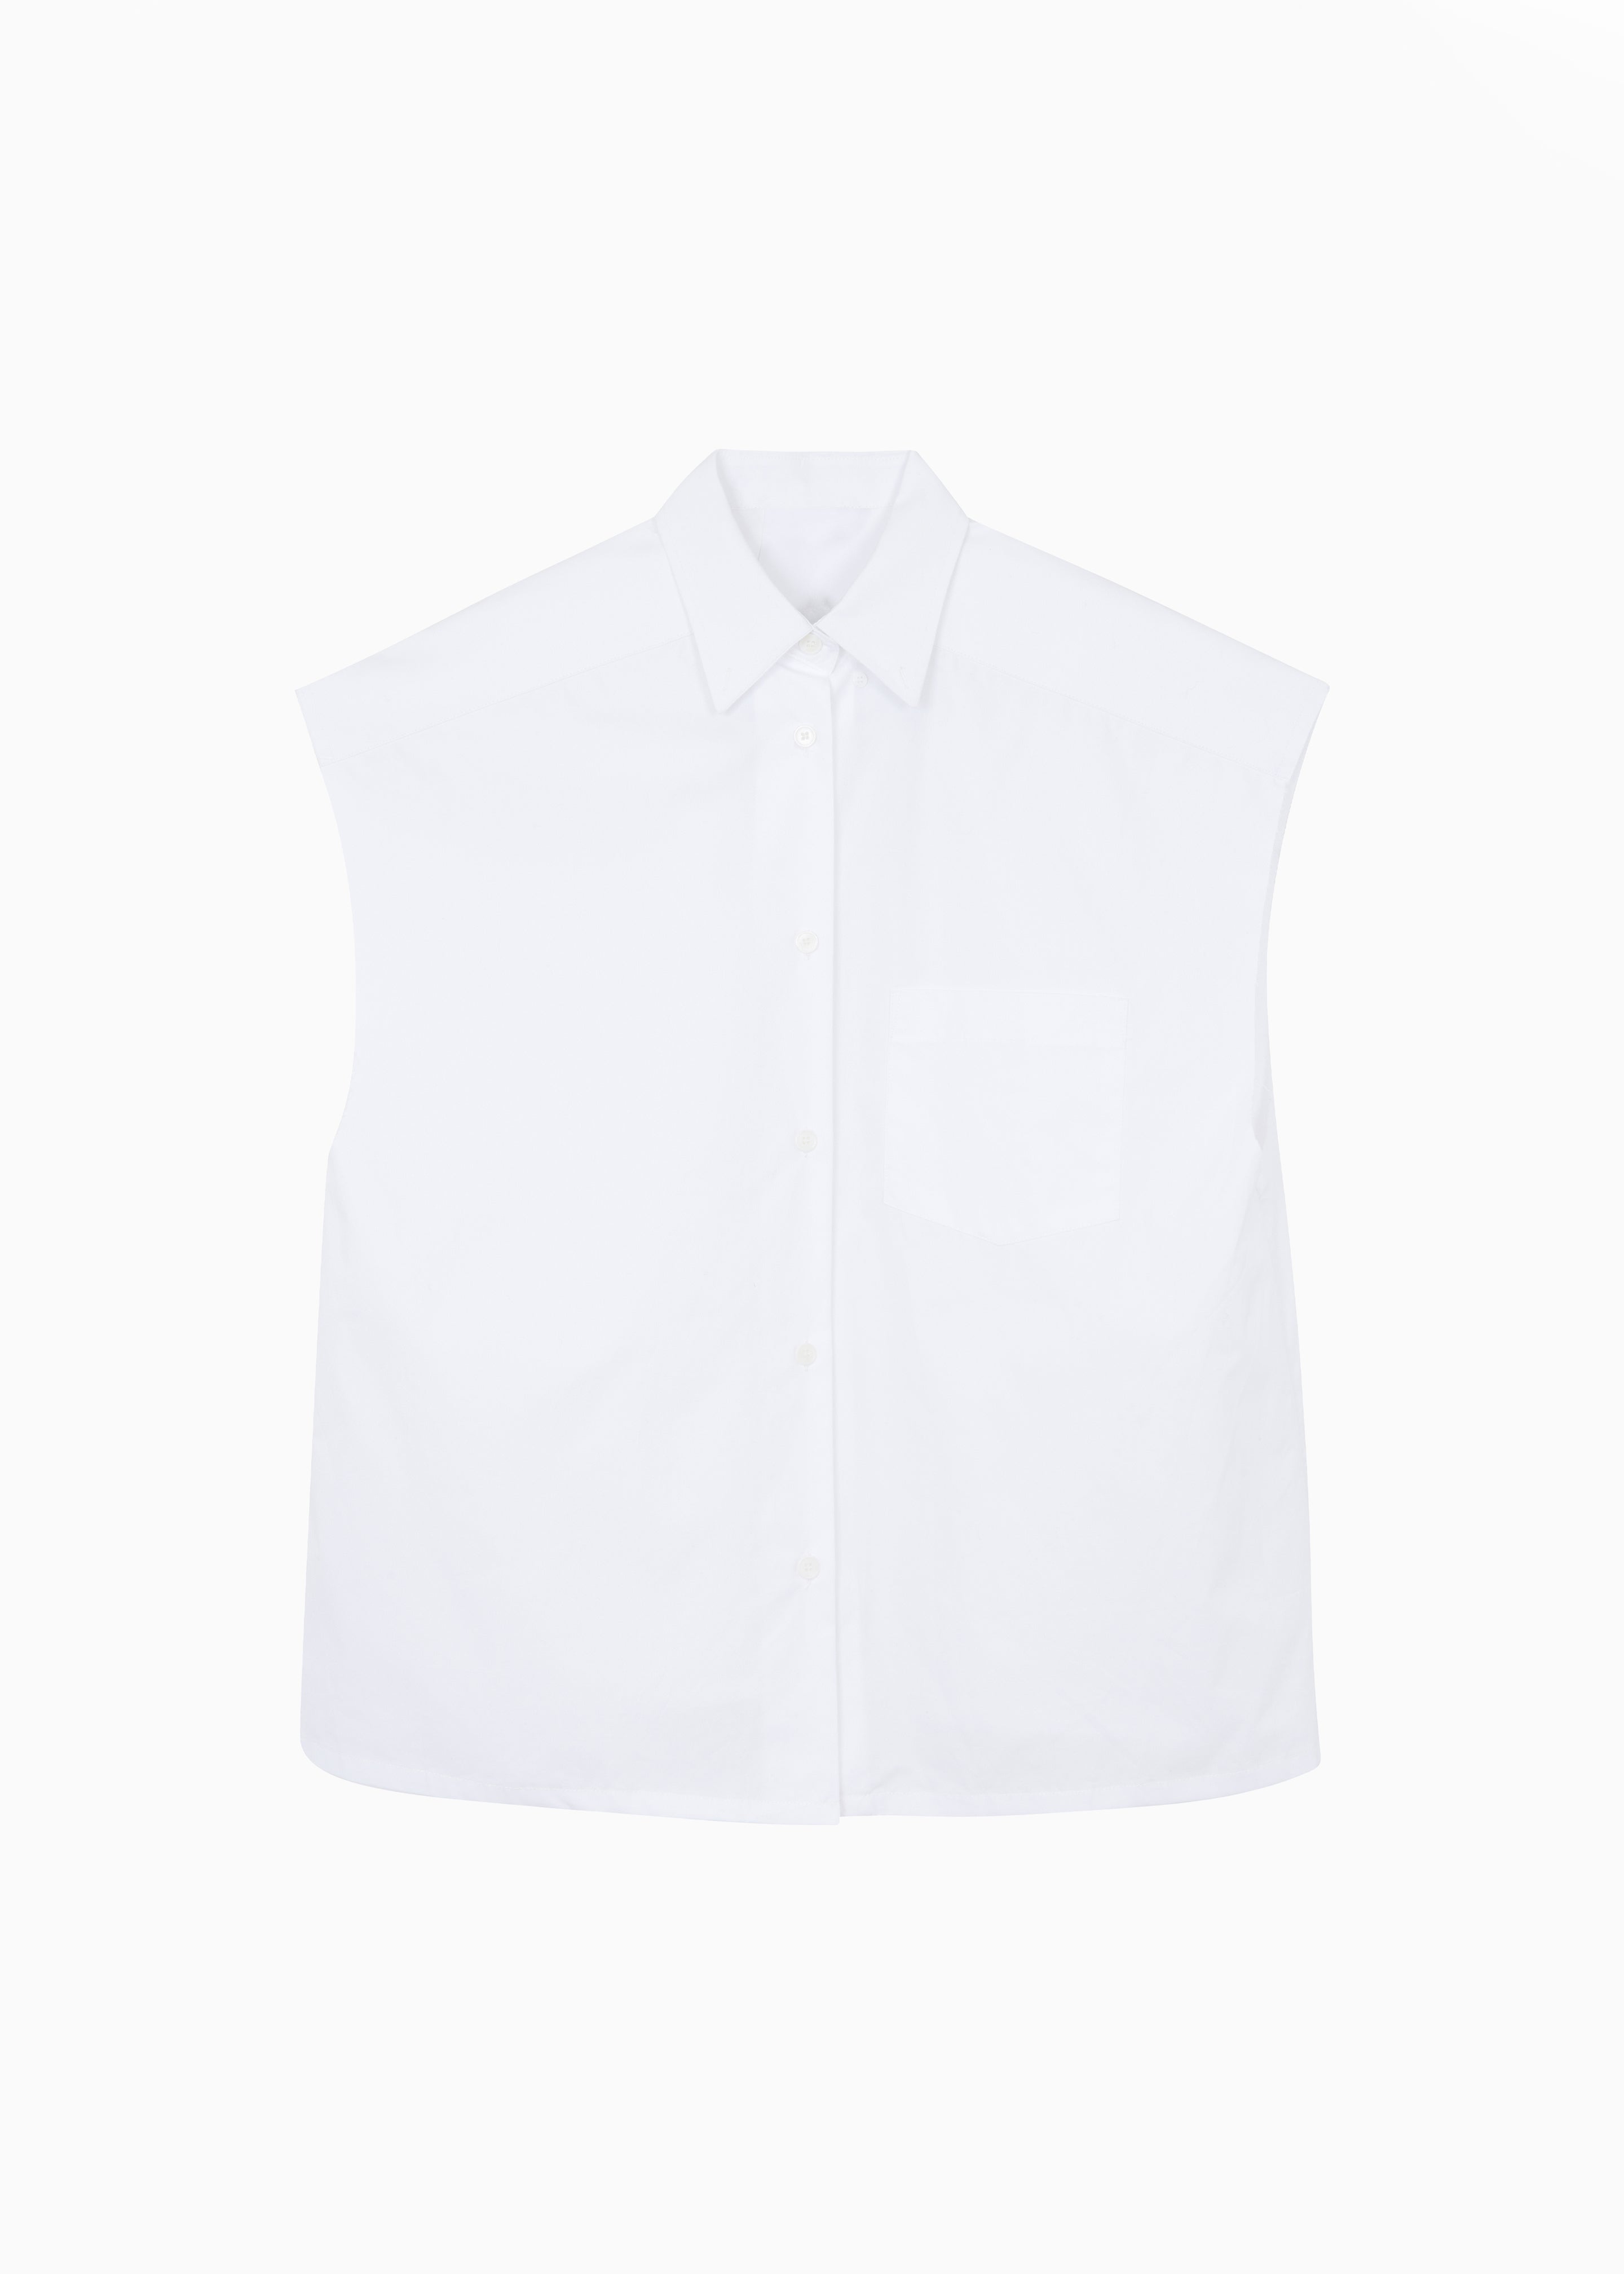 Rae Sleeveless Button Down Shirt - White - 5